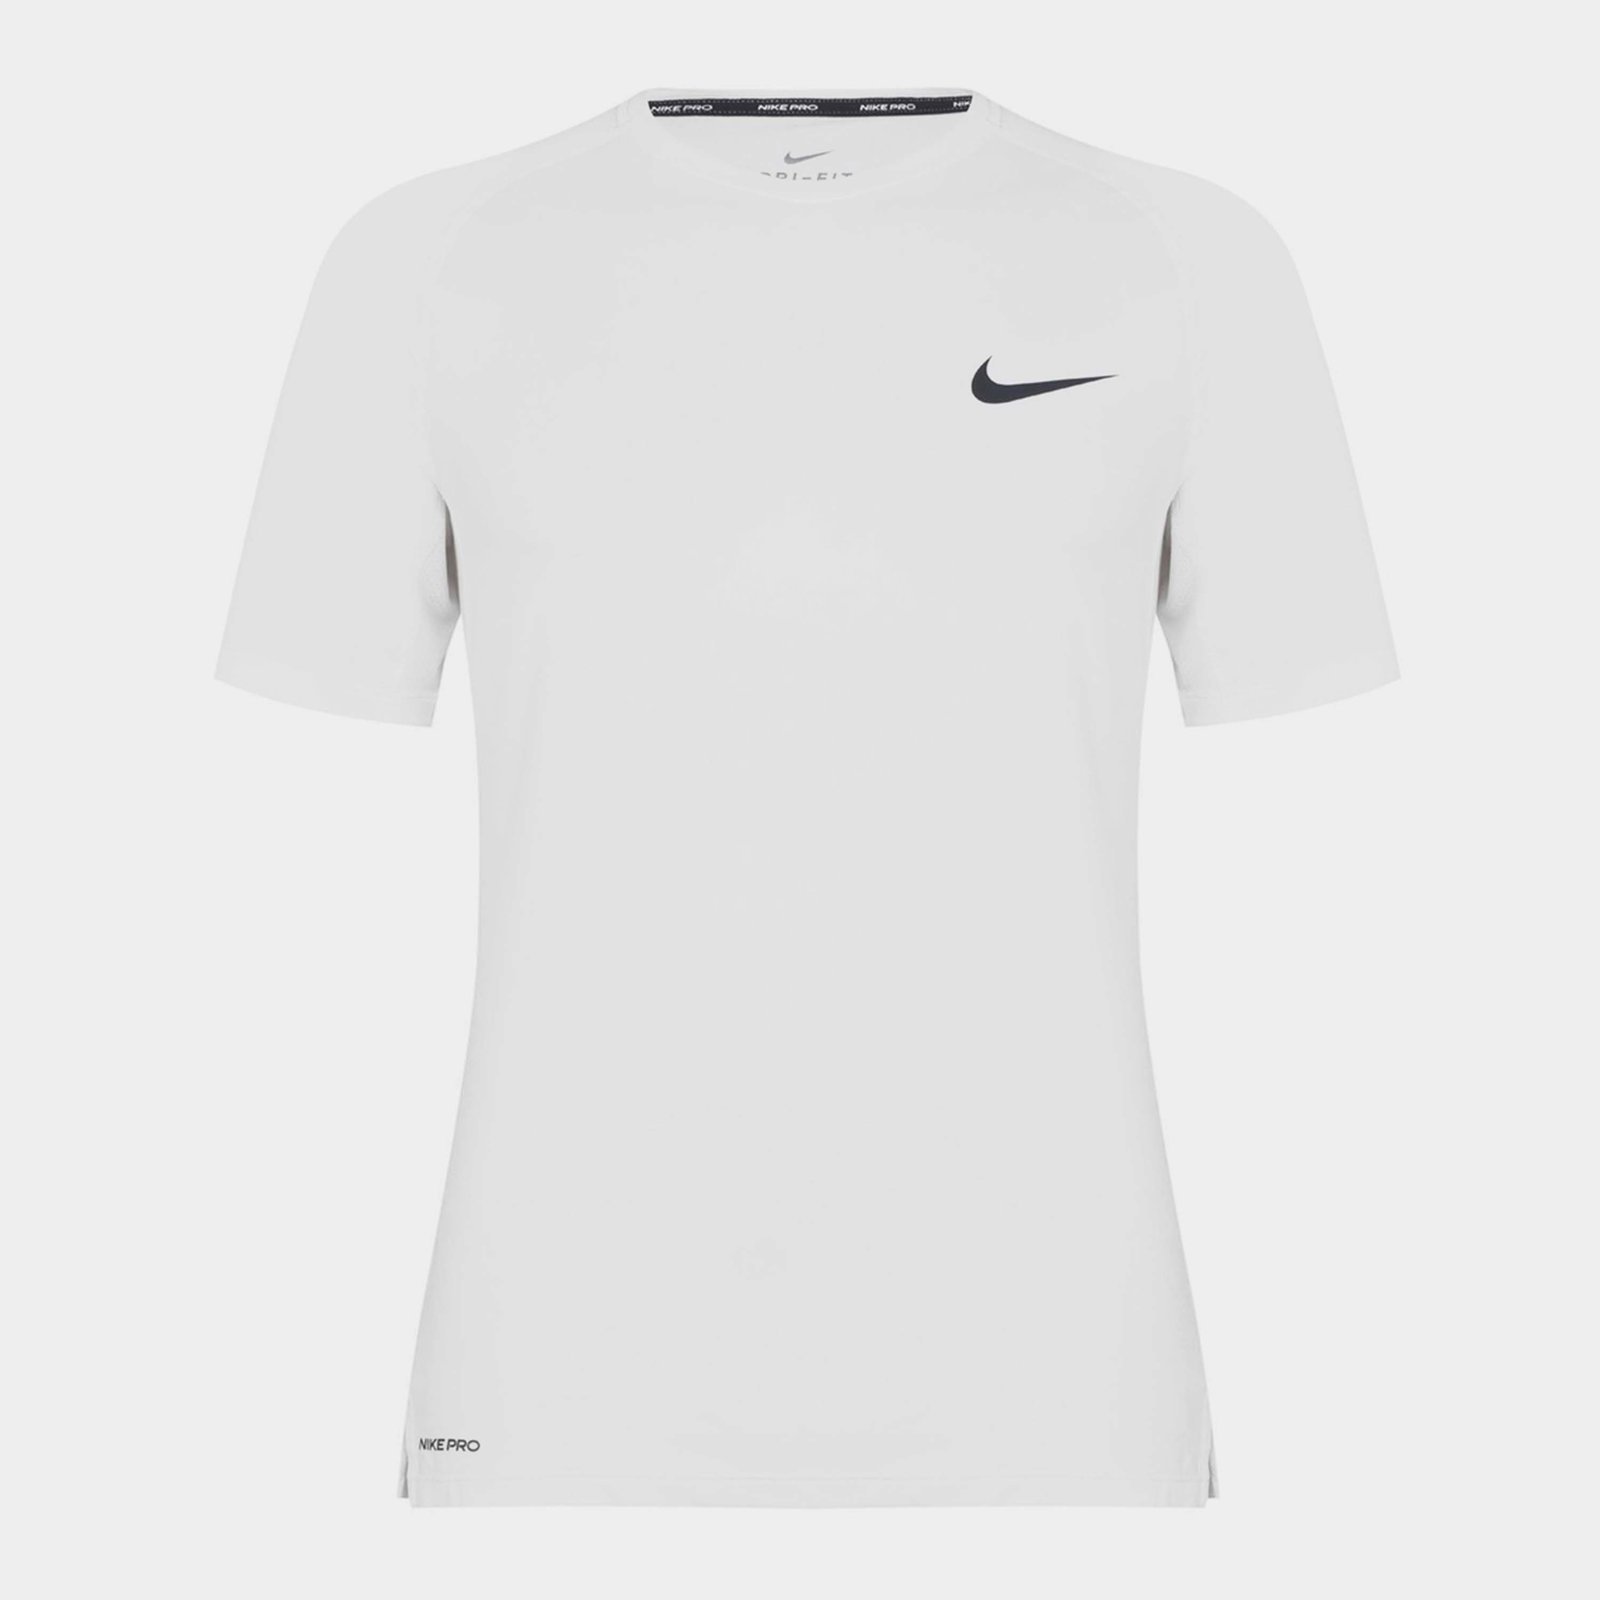 Nike Pro Training baselayer T-shirt in white